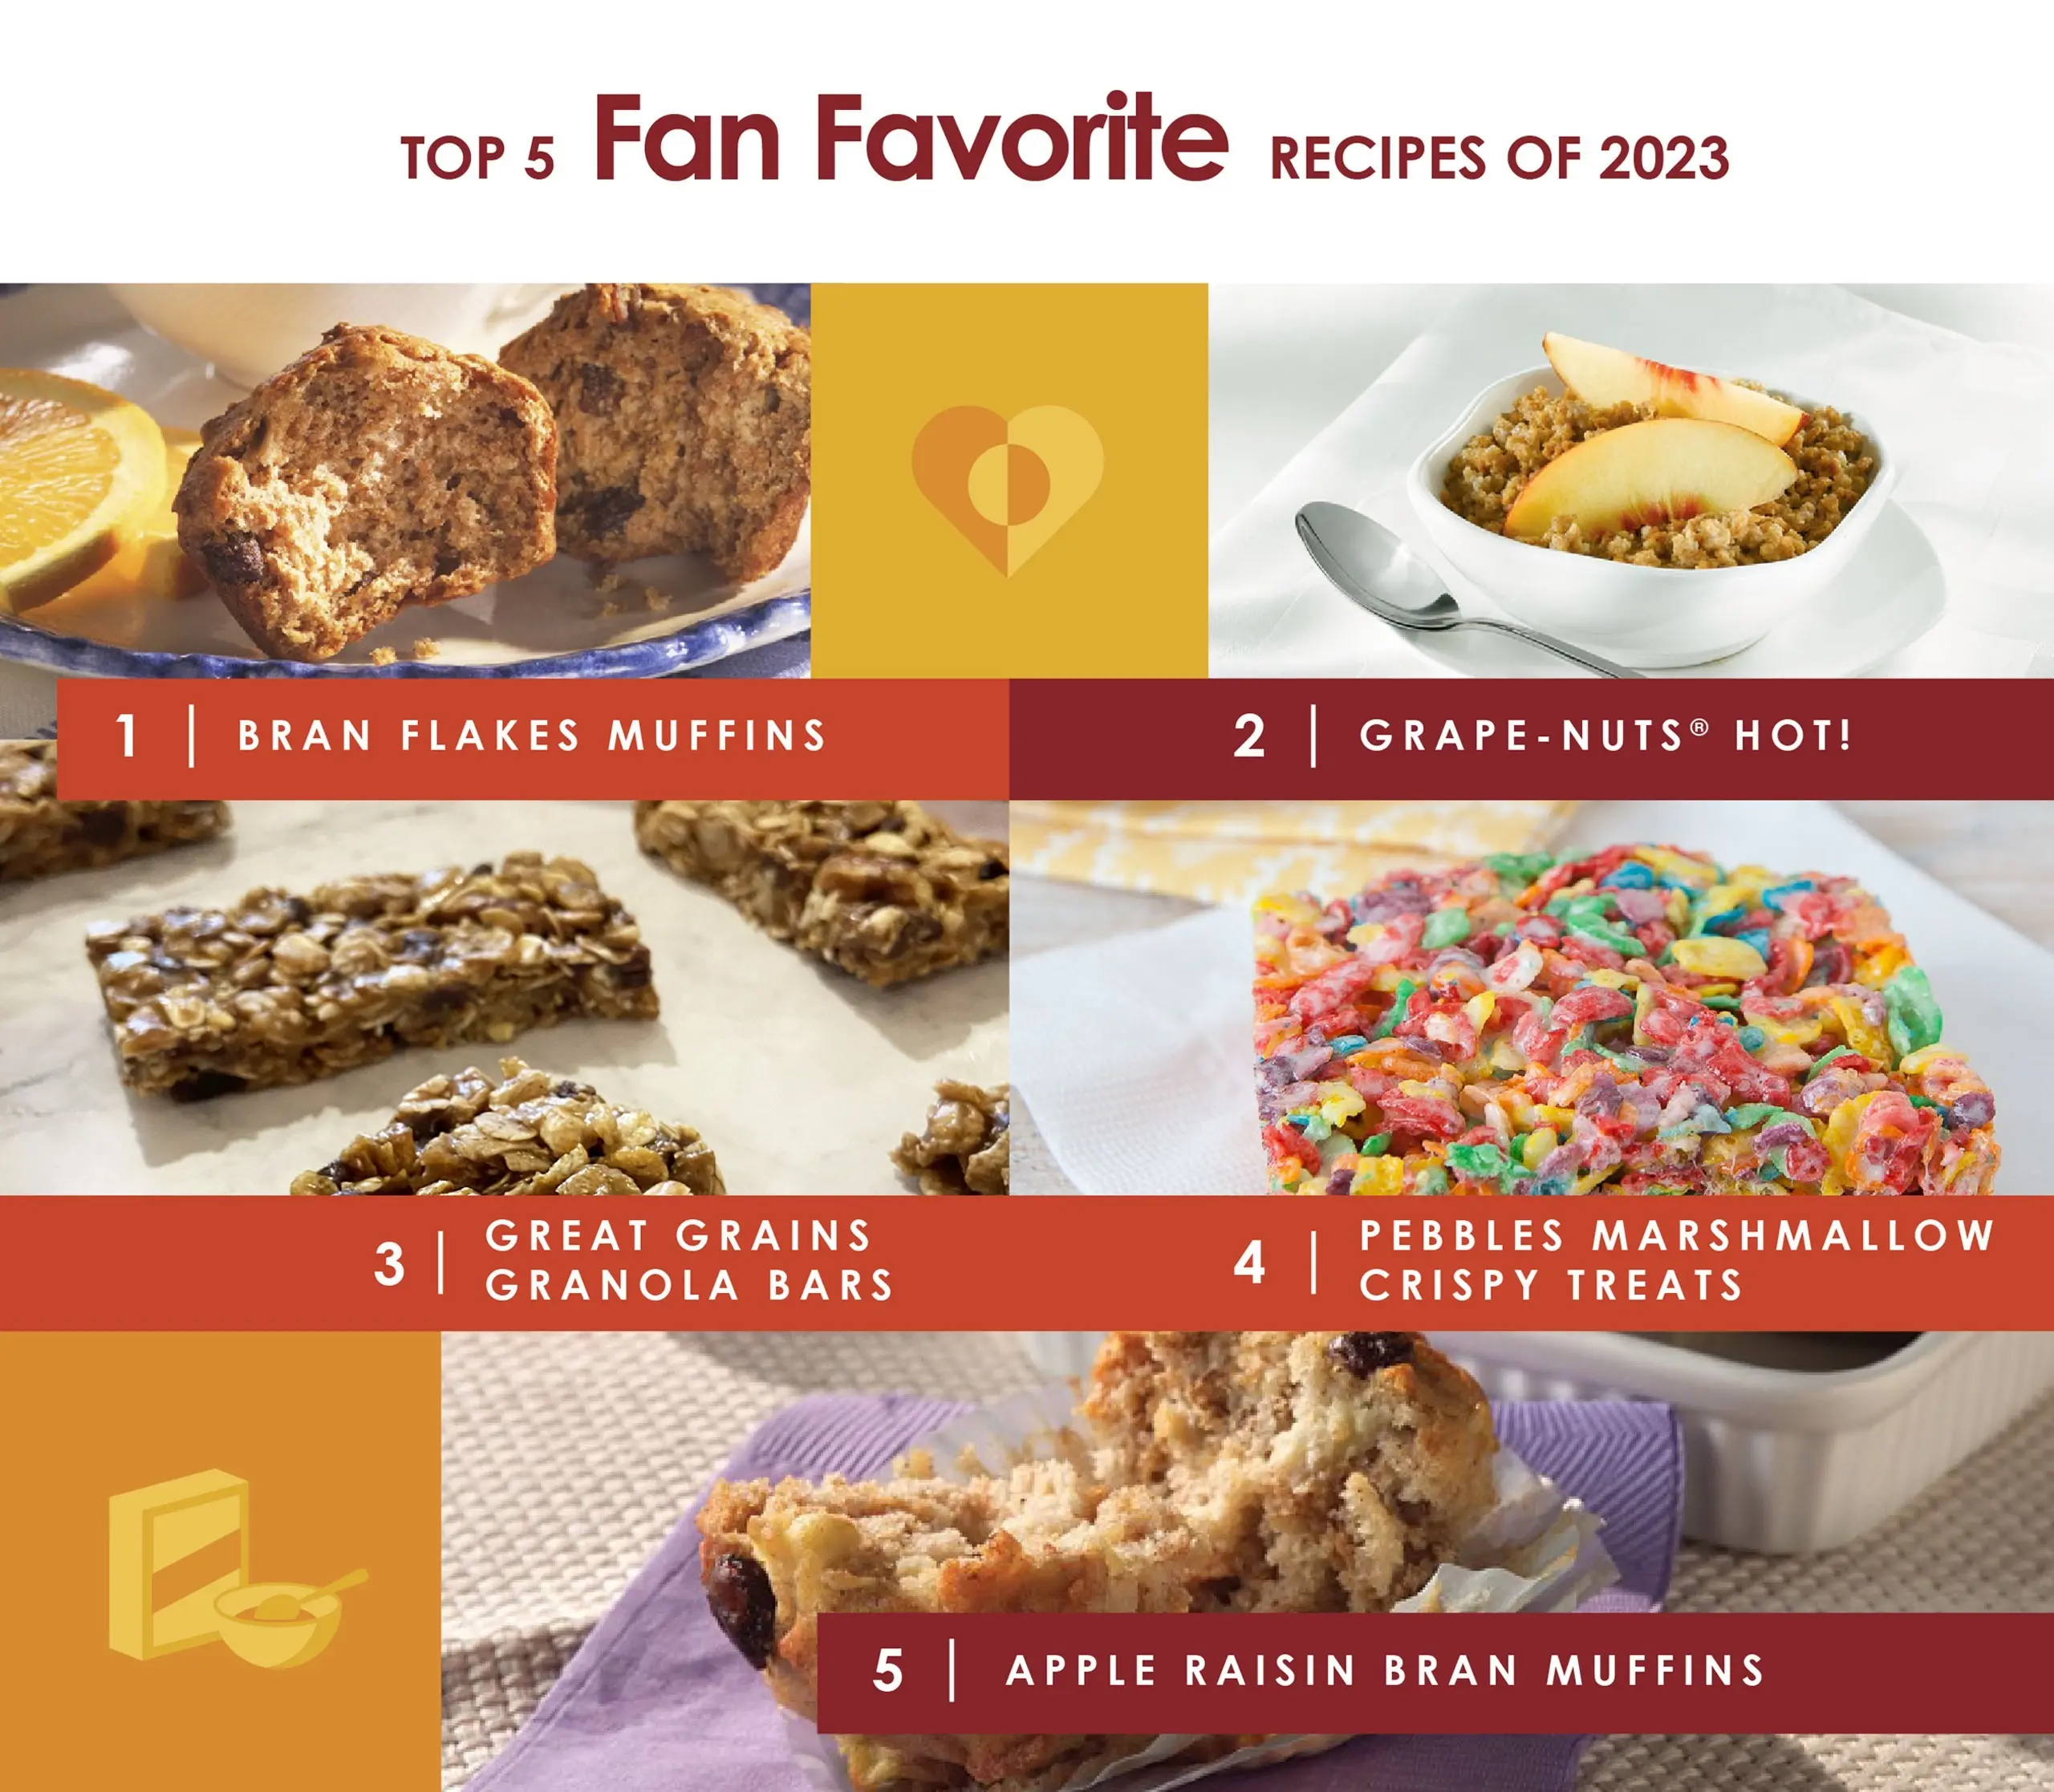 Top 5 Fan Favorite Recipes of 2023: 1. Bran Flakes Muffins, 2. Grape-Nuts Hot!, 3. Great Greats Granola Bars, 4. PEBBLES Marshmallow Crispy Treats, 5. Apple Raisin Bran Muffins